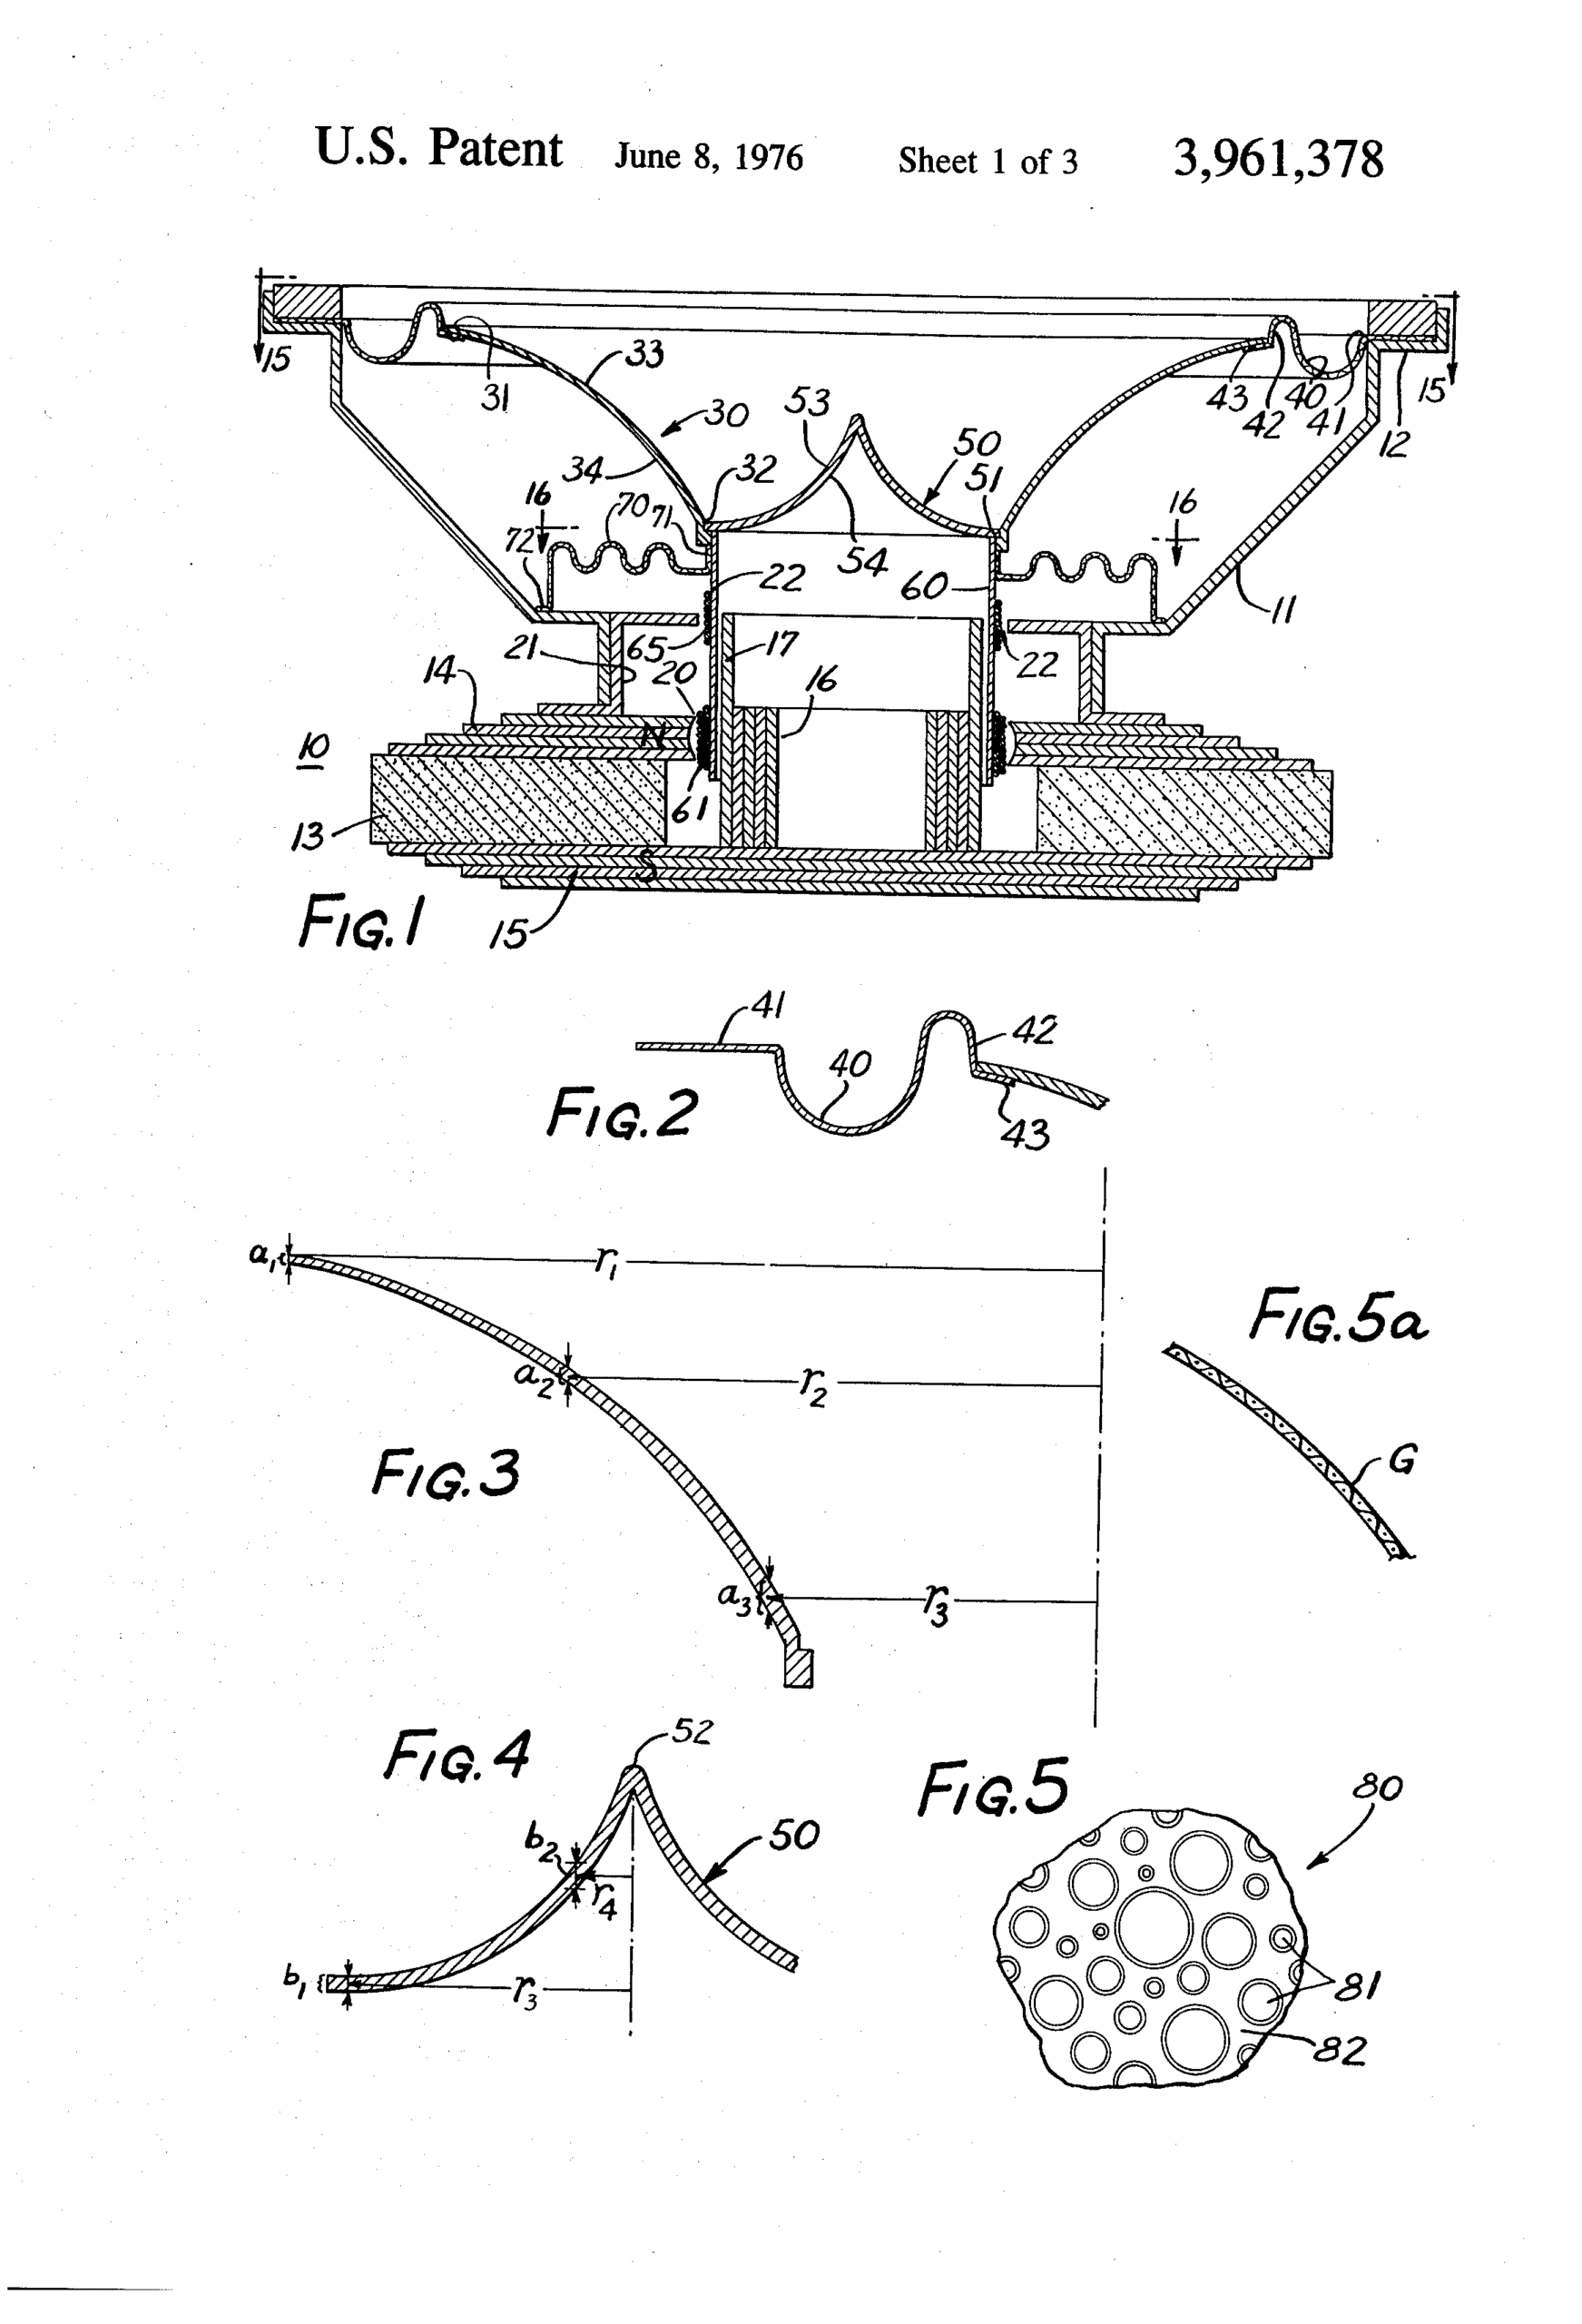 Stan White patent drawing